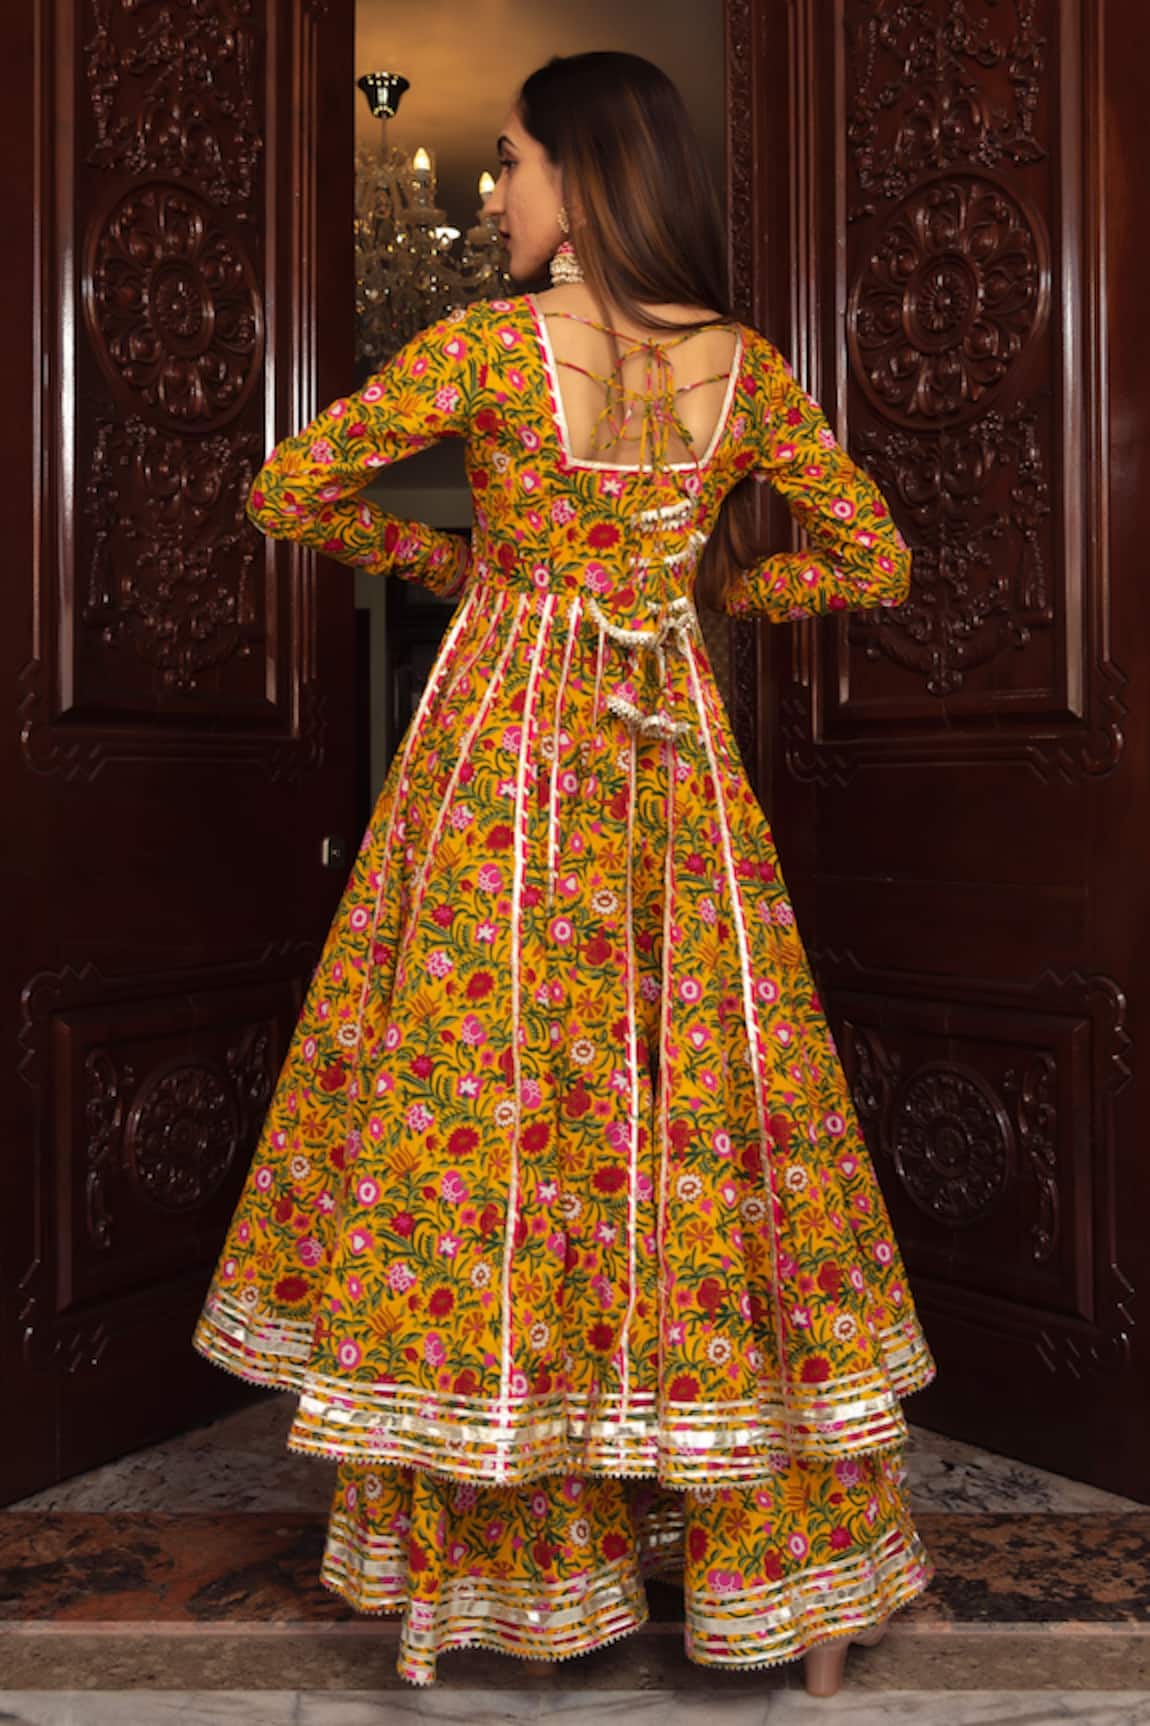 Mastani dress  Mastani dress Deewani mastani dress Indian fashion dresses